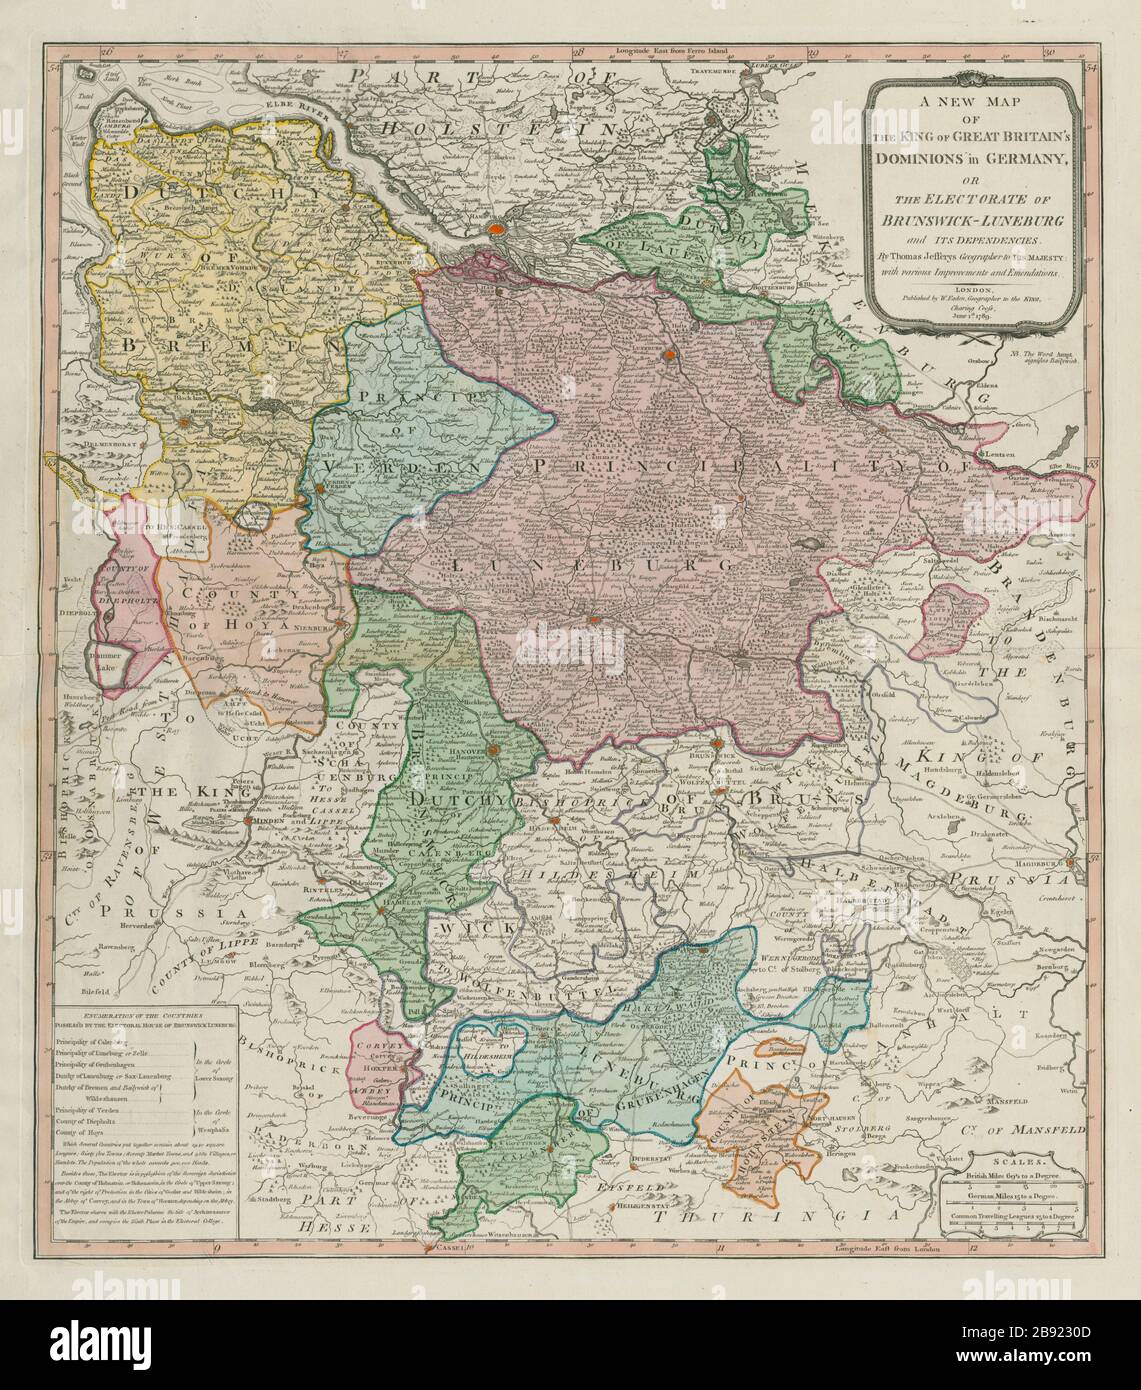 King of Great Britain's dominions in Germany. Brunswick. JEFFERYS/FADEN 1789 map Stock Photo